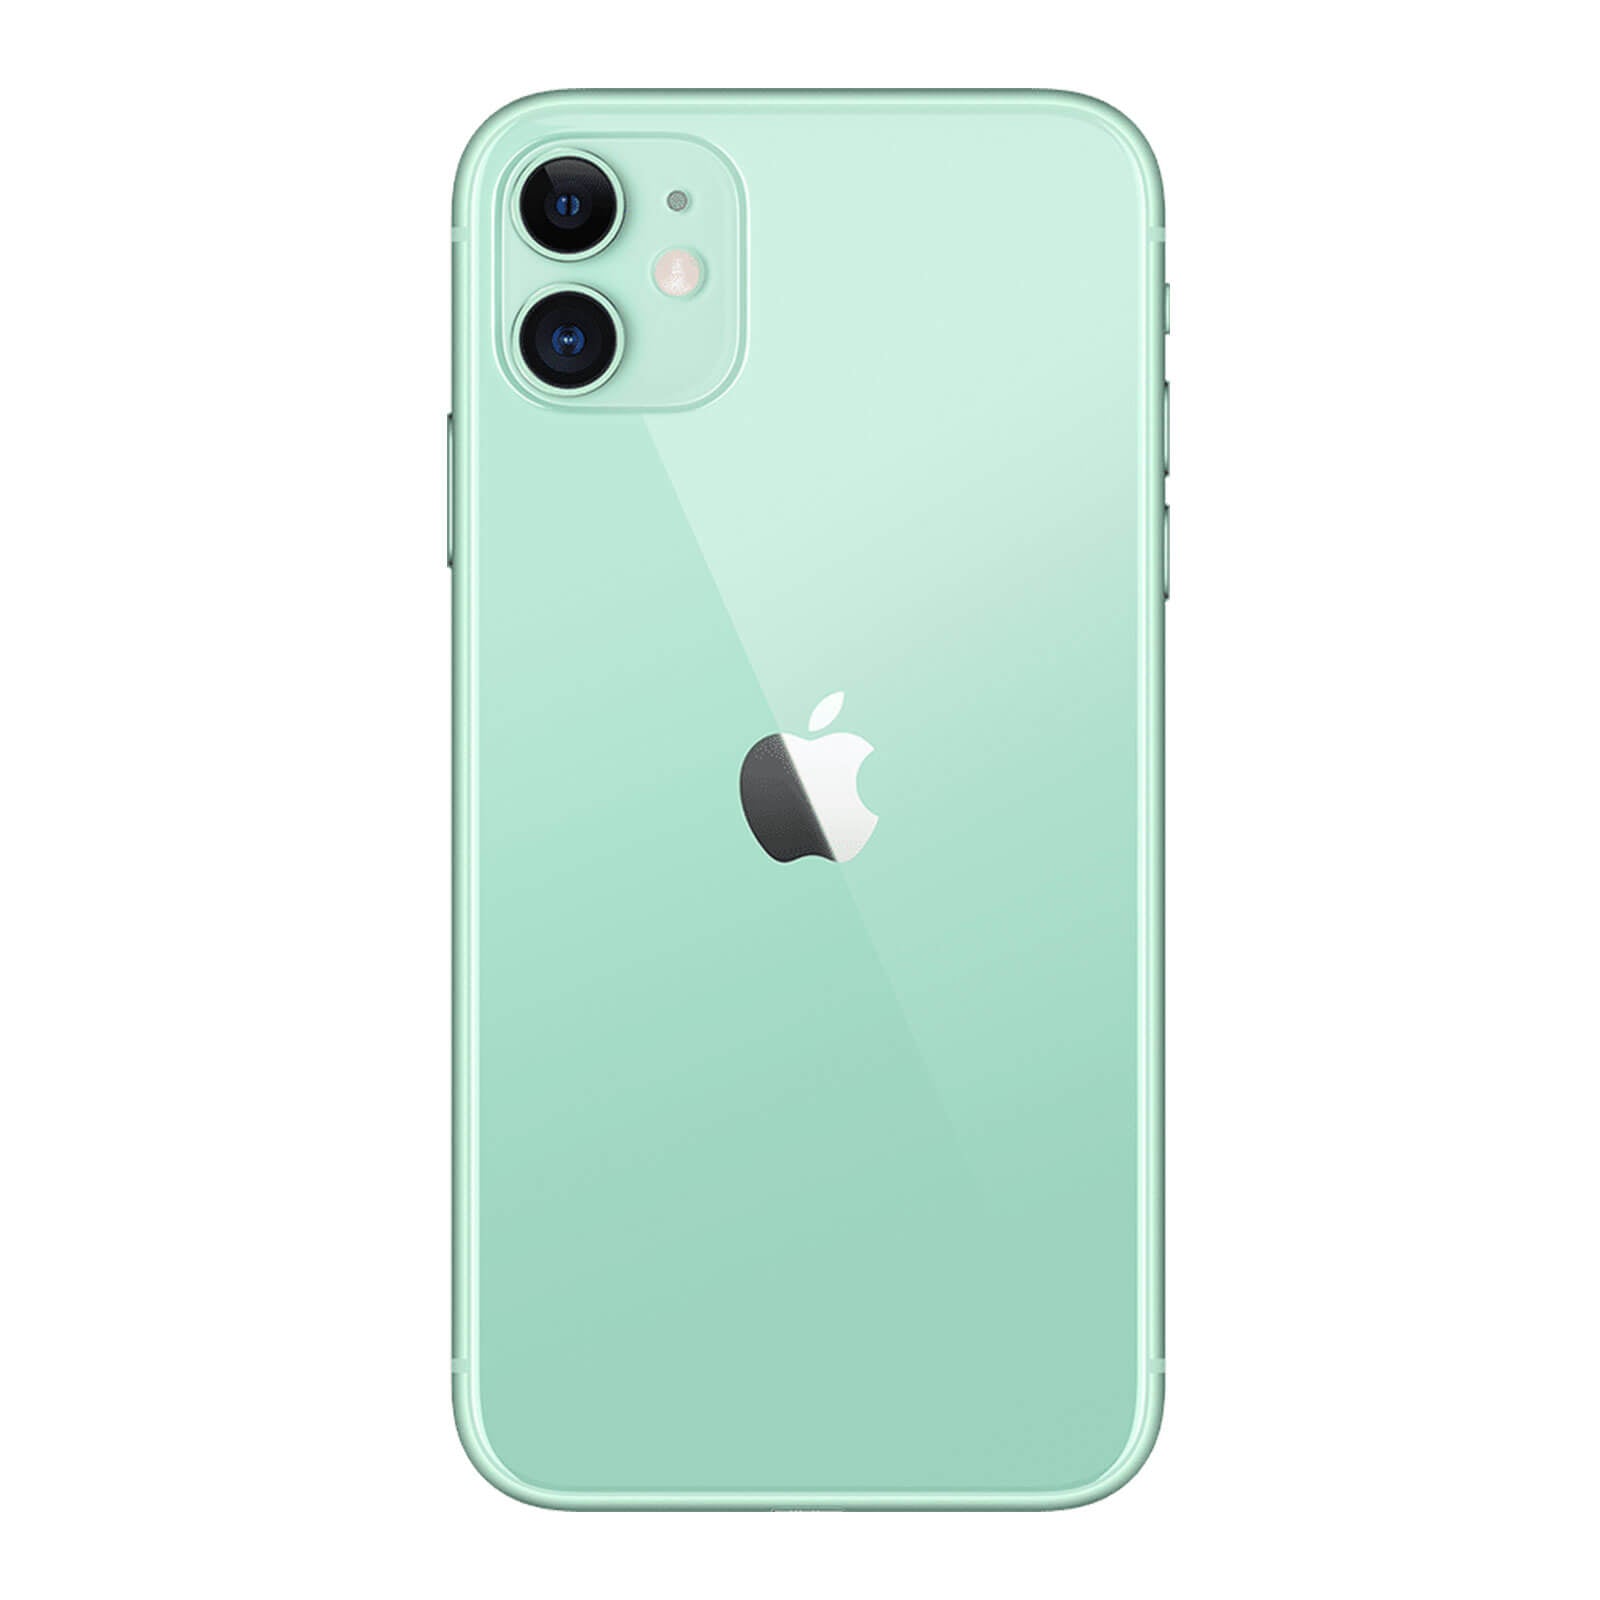 Apple iPhone 11 128GB Green Pristine - Unlocked